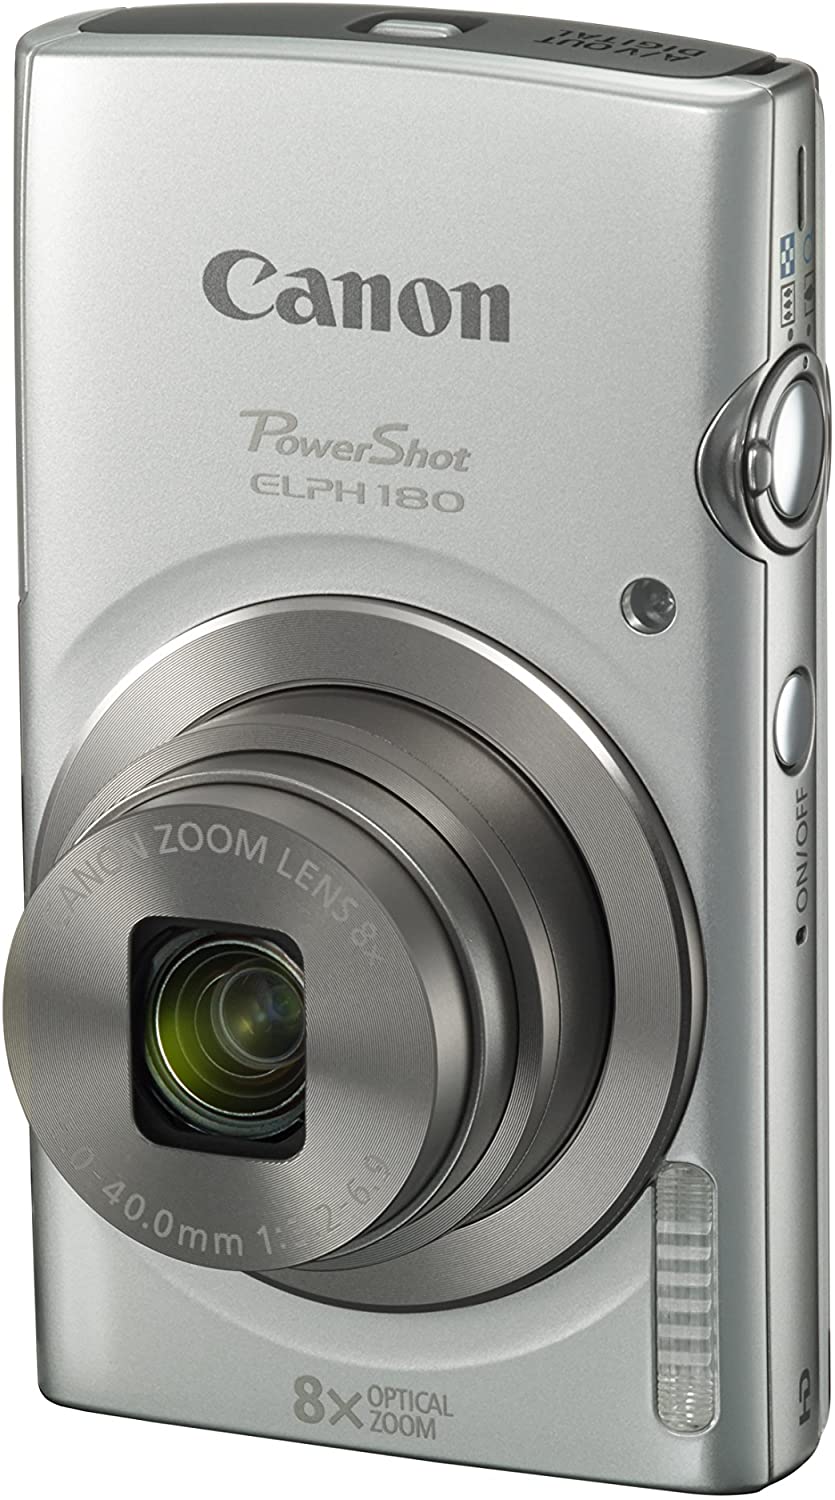 Ritmisch Ellendig rechter Canon PowerShot ELPH 180 Digital Camera (Silver) – iHeartCamera